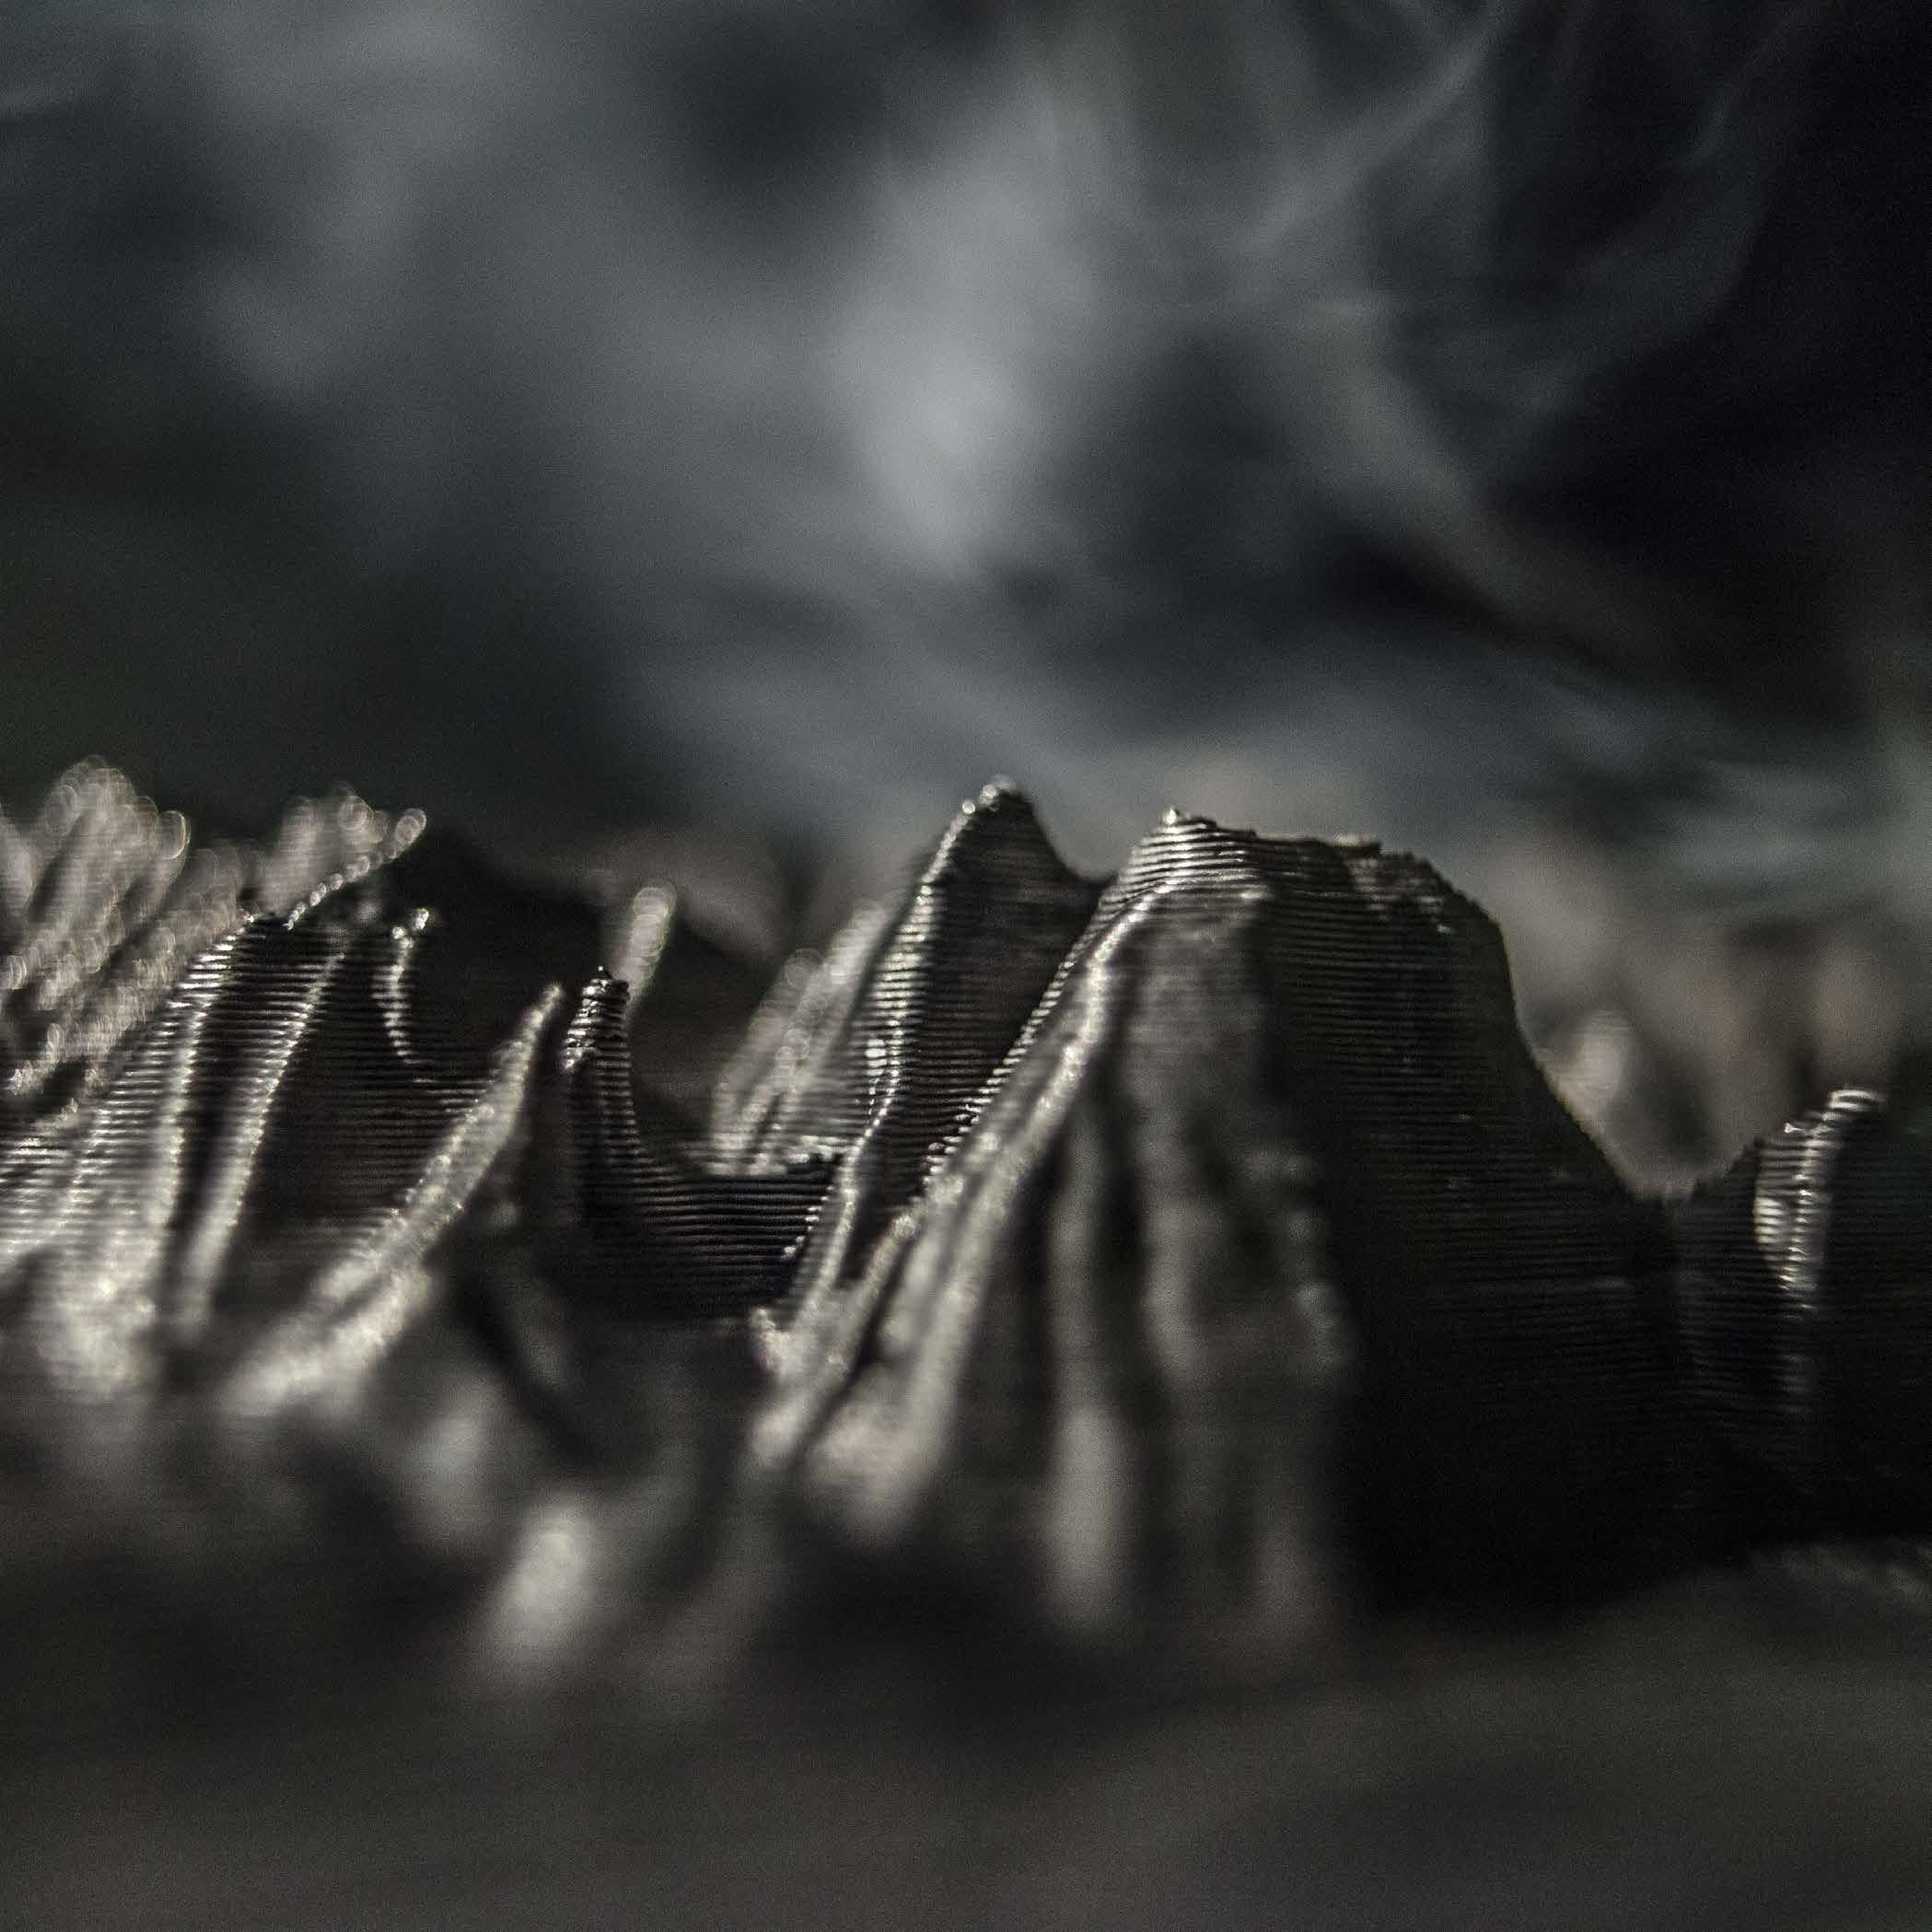 Edward Bateman Landscape Photograph - Cathedral Rock No. 1 (with 3D printed landscape)